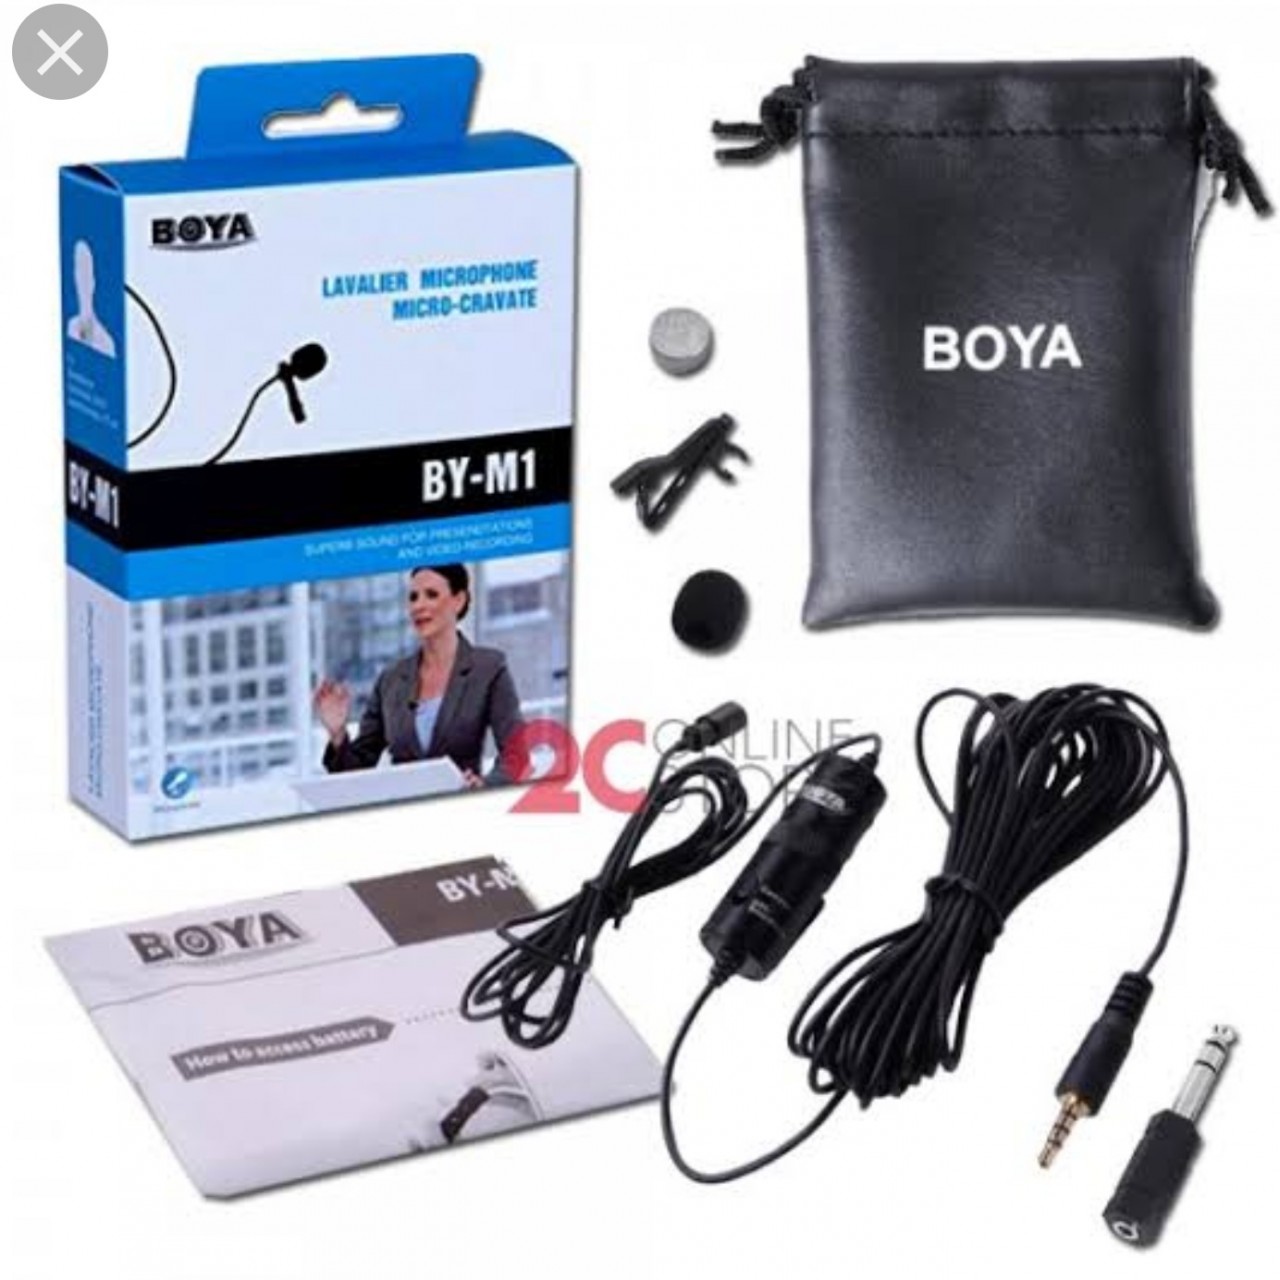 Boya m1 Microphone For Mobiles